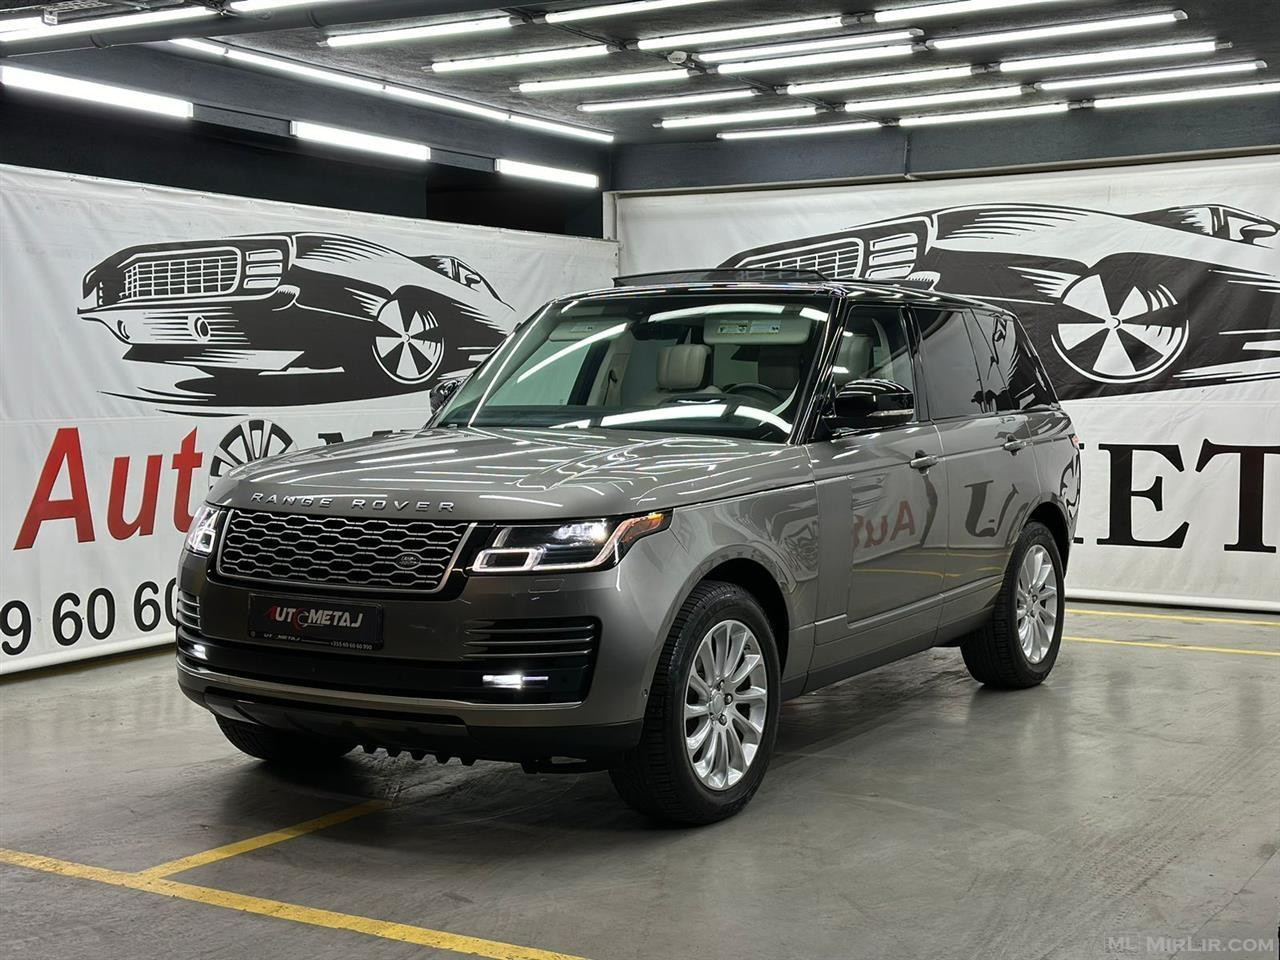  Range Rover Vogue Viti Prodhimit Fundi 2018 3.0 Diesel